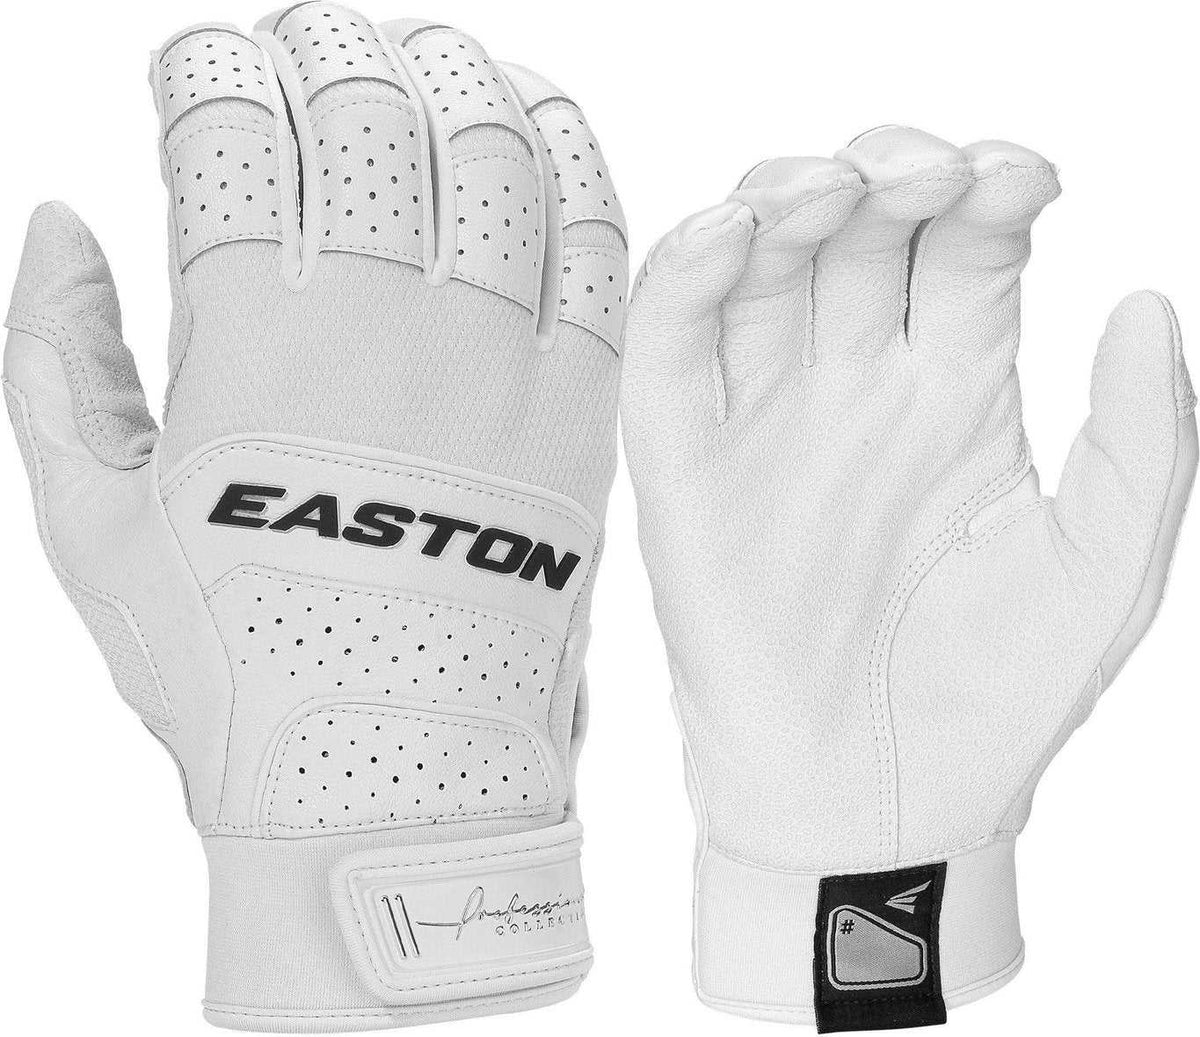 Easton Professional Collection Batting Gloves - White White - HIT a Double